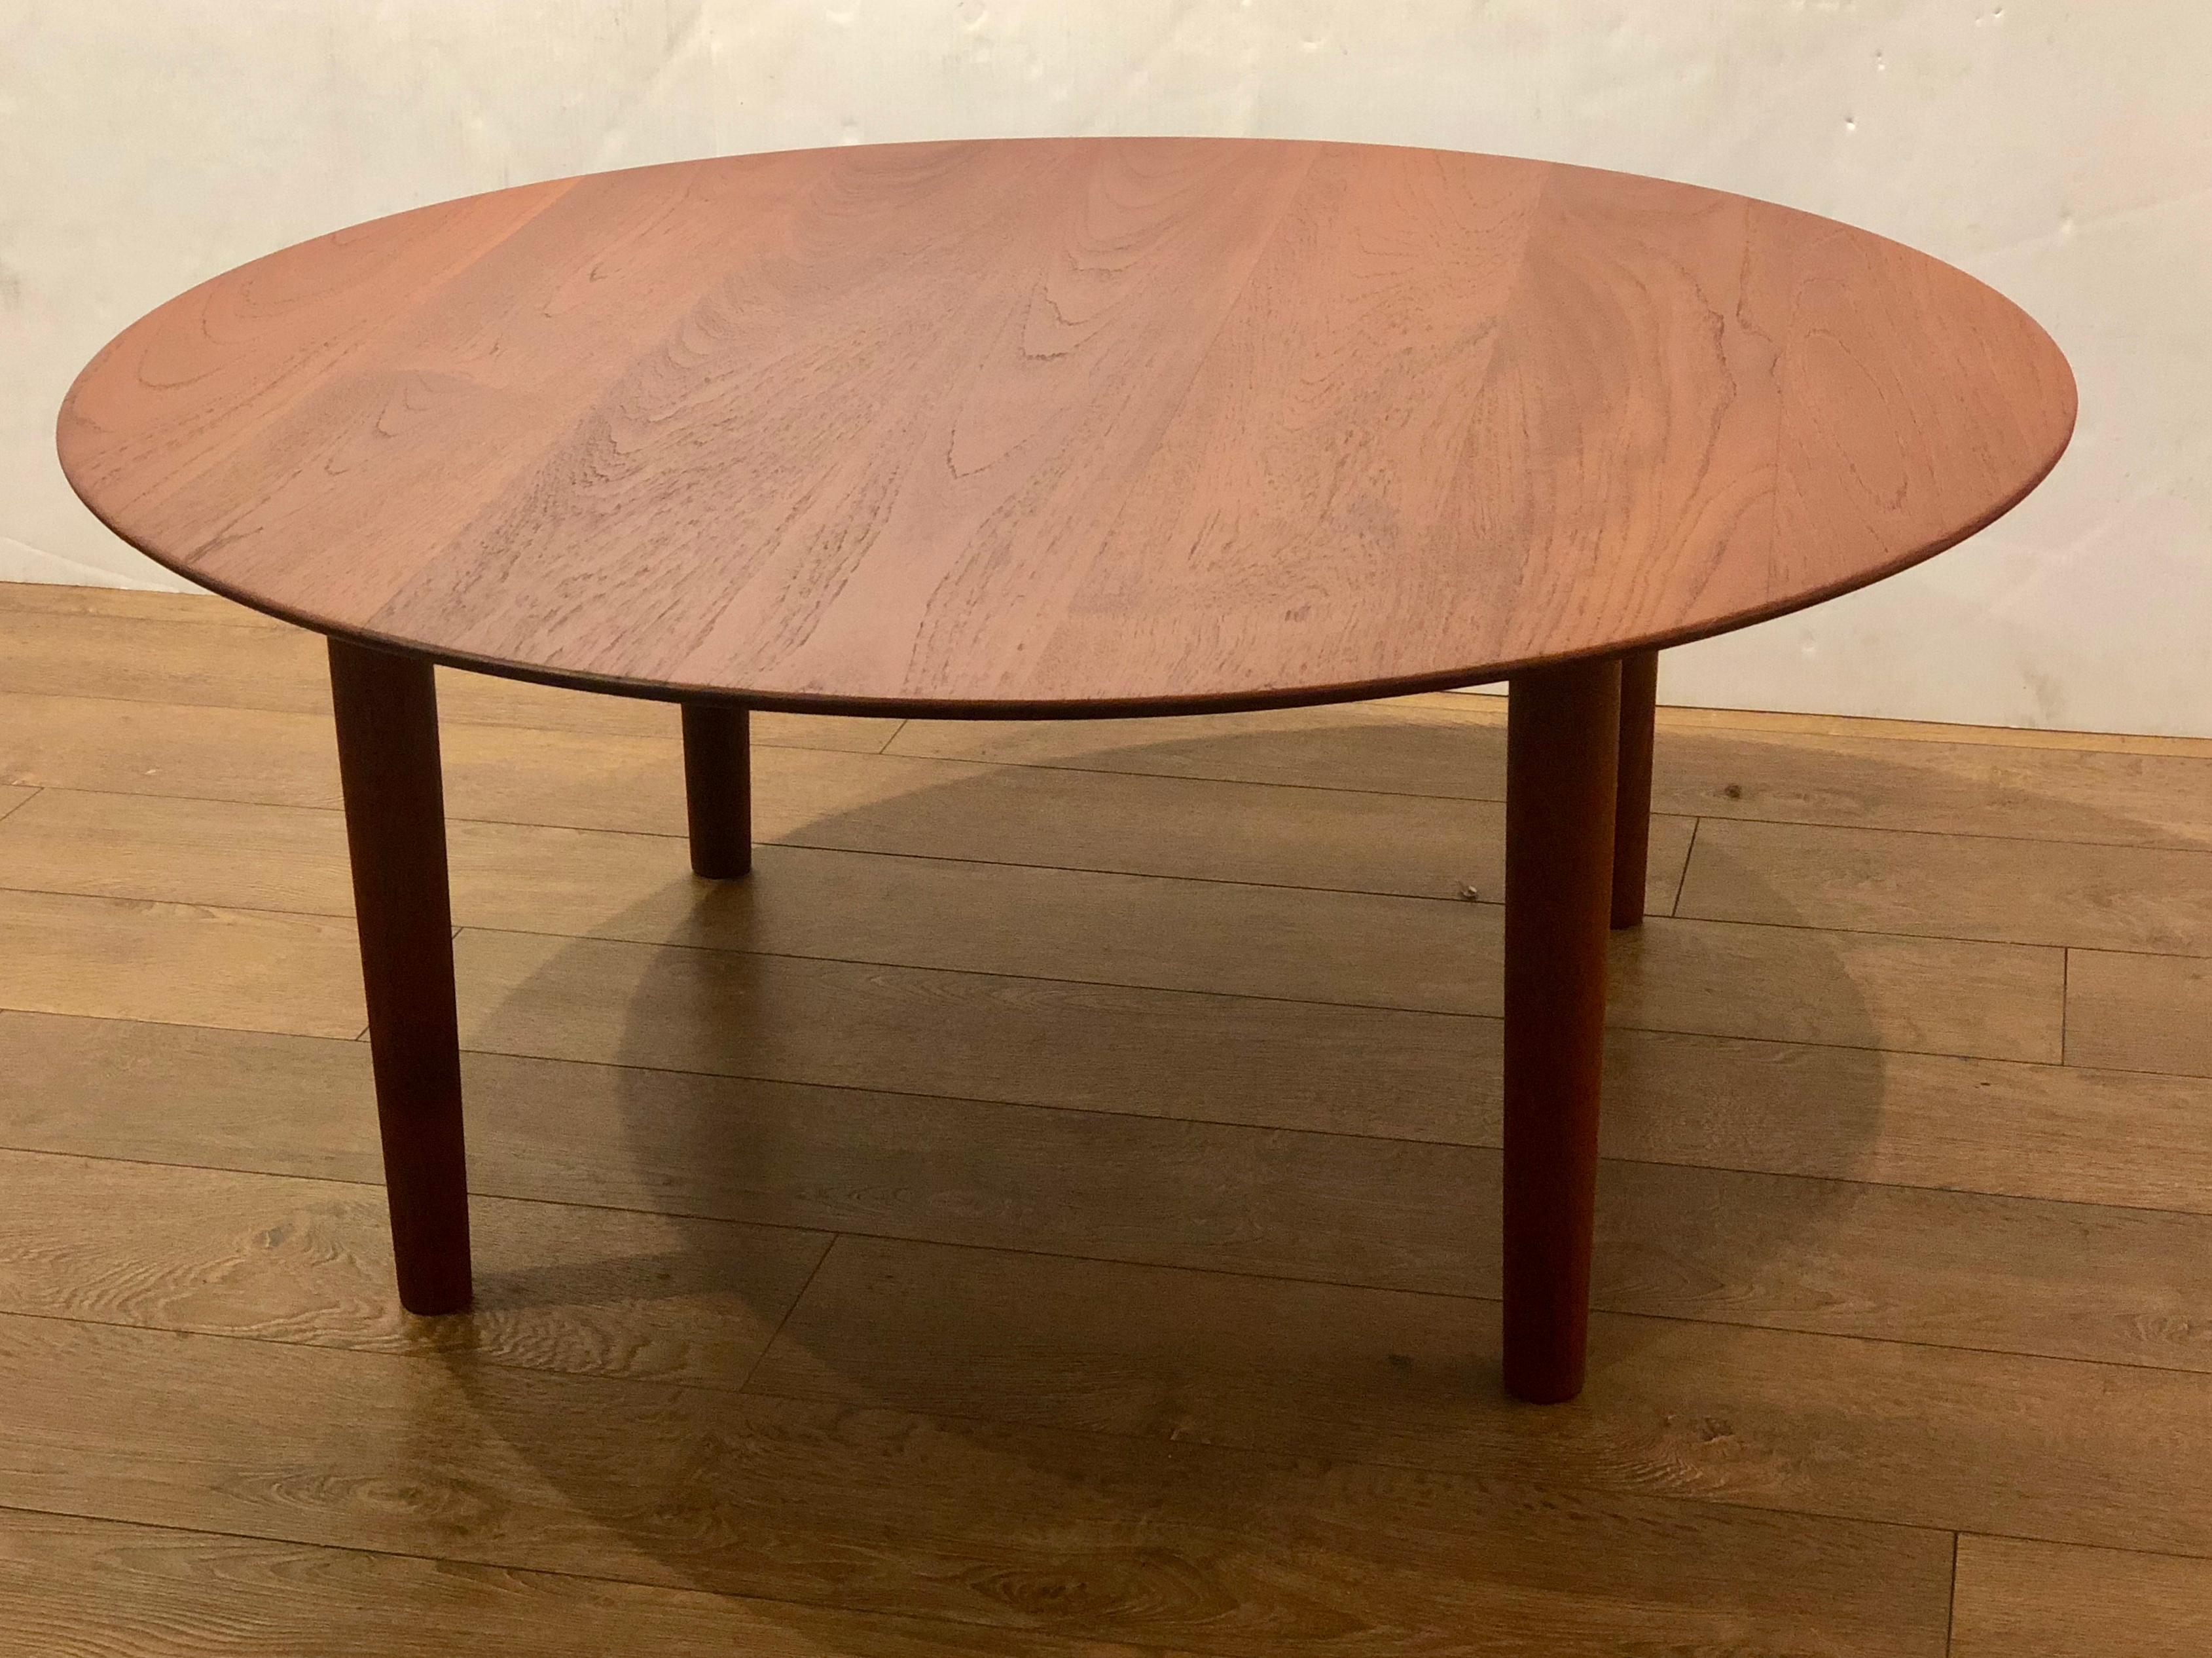 Scandinavian Modern Danish Modern Solid Teak Round Coffee Table with Beveled Edge